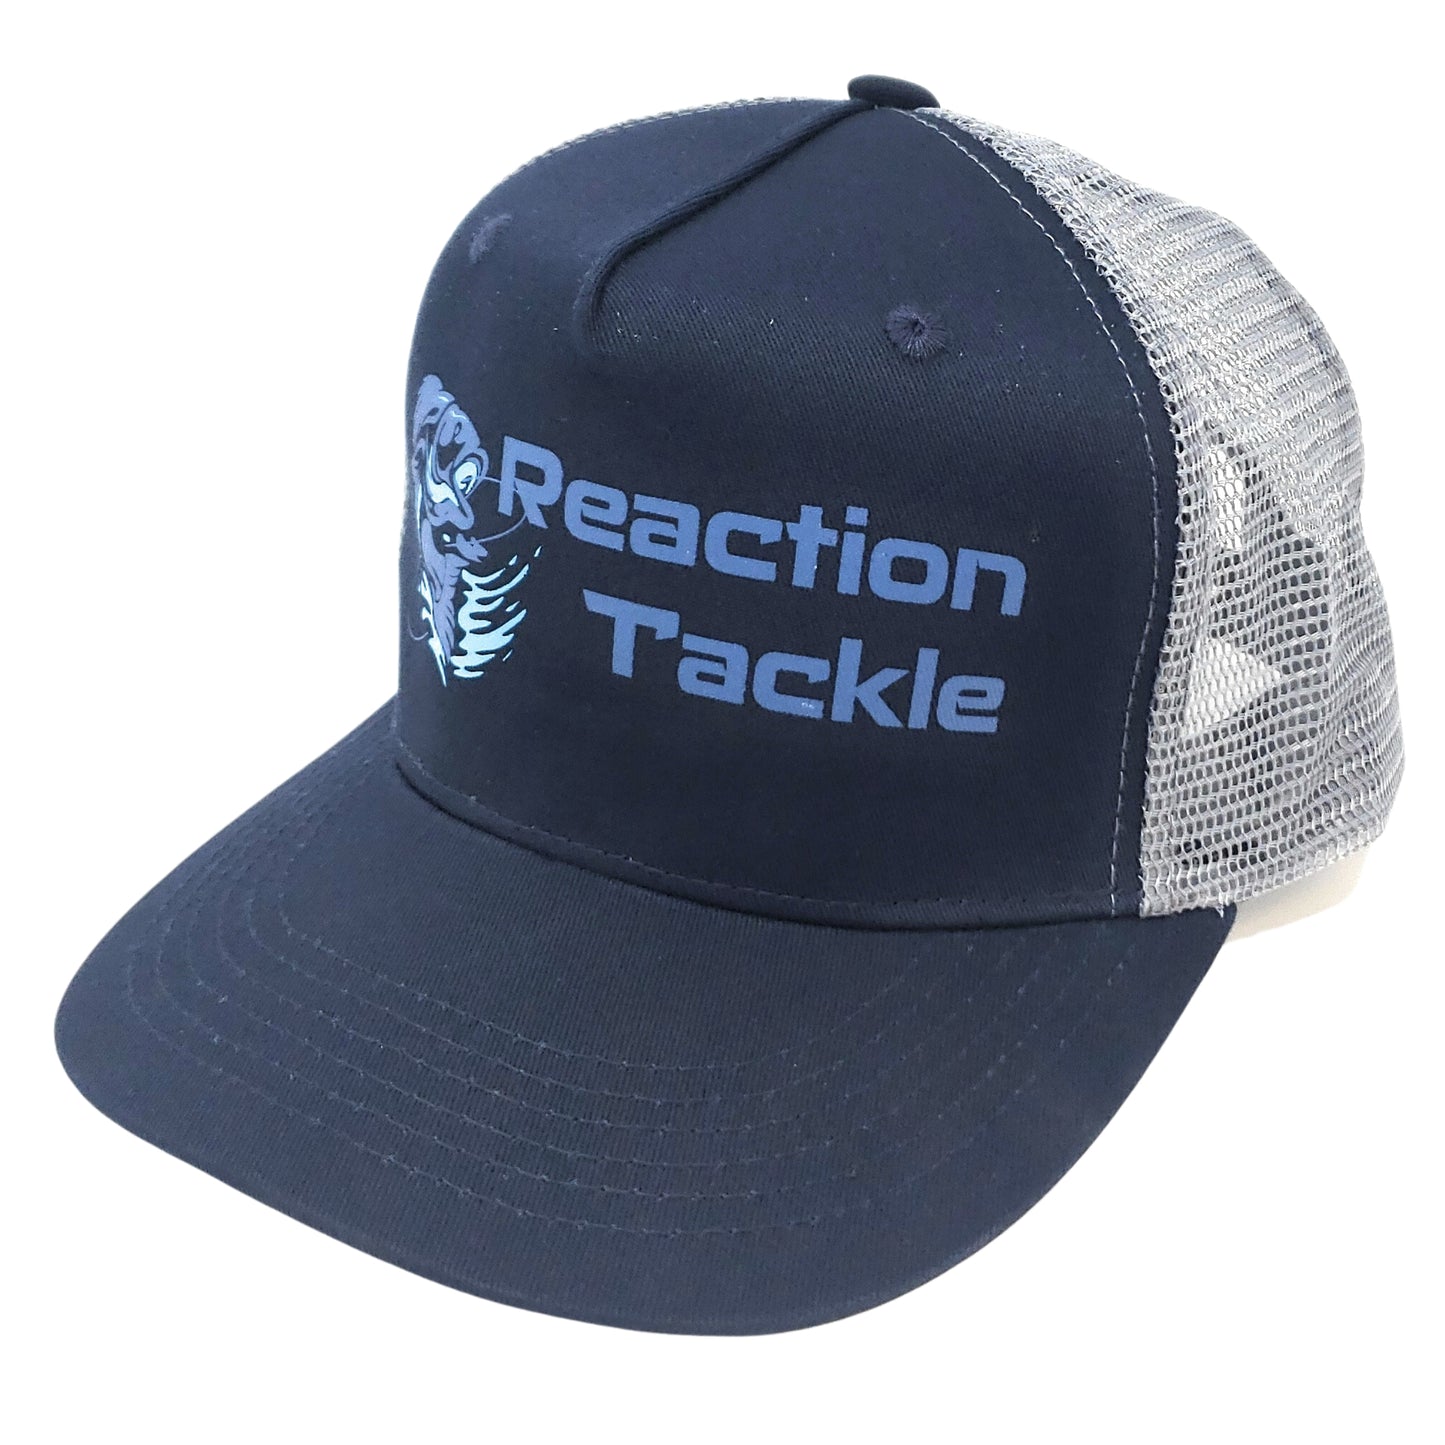 Reaction Tackle Hats